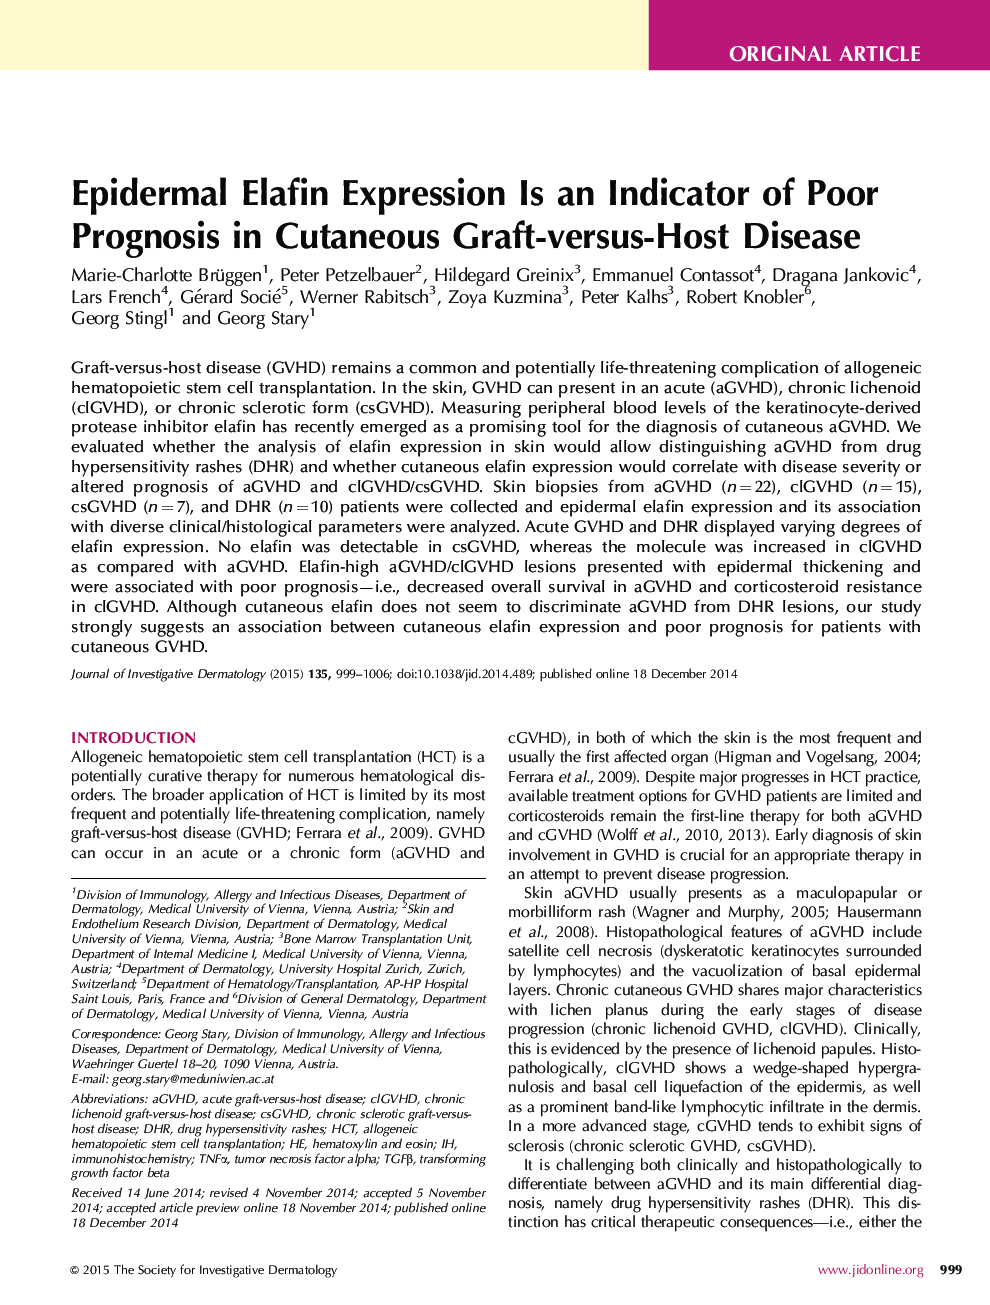 Epidermal Elafin Expression Is an Indicator of Poor Prognosis in Cutaneous Graft-versus-Host Disease